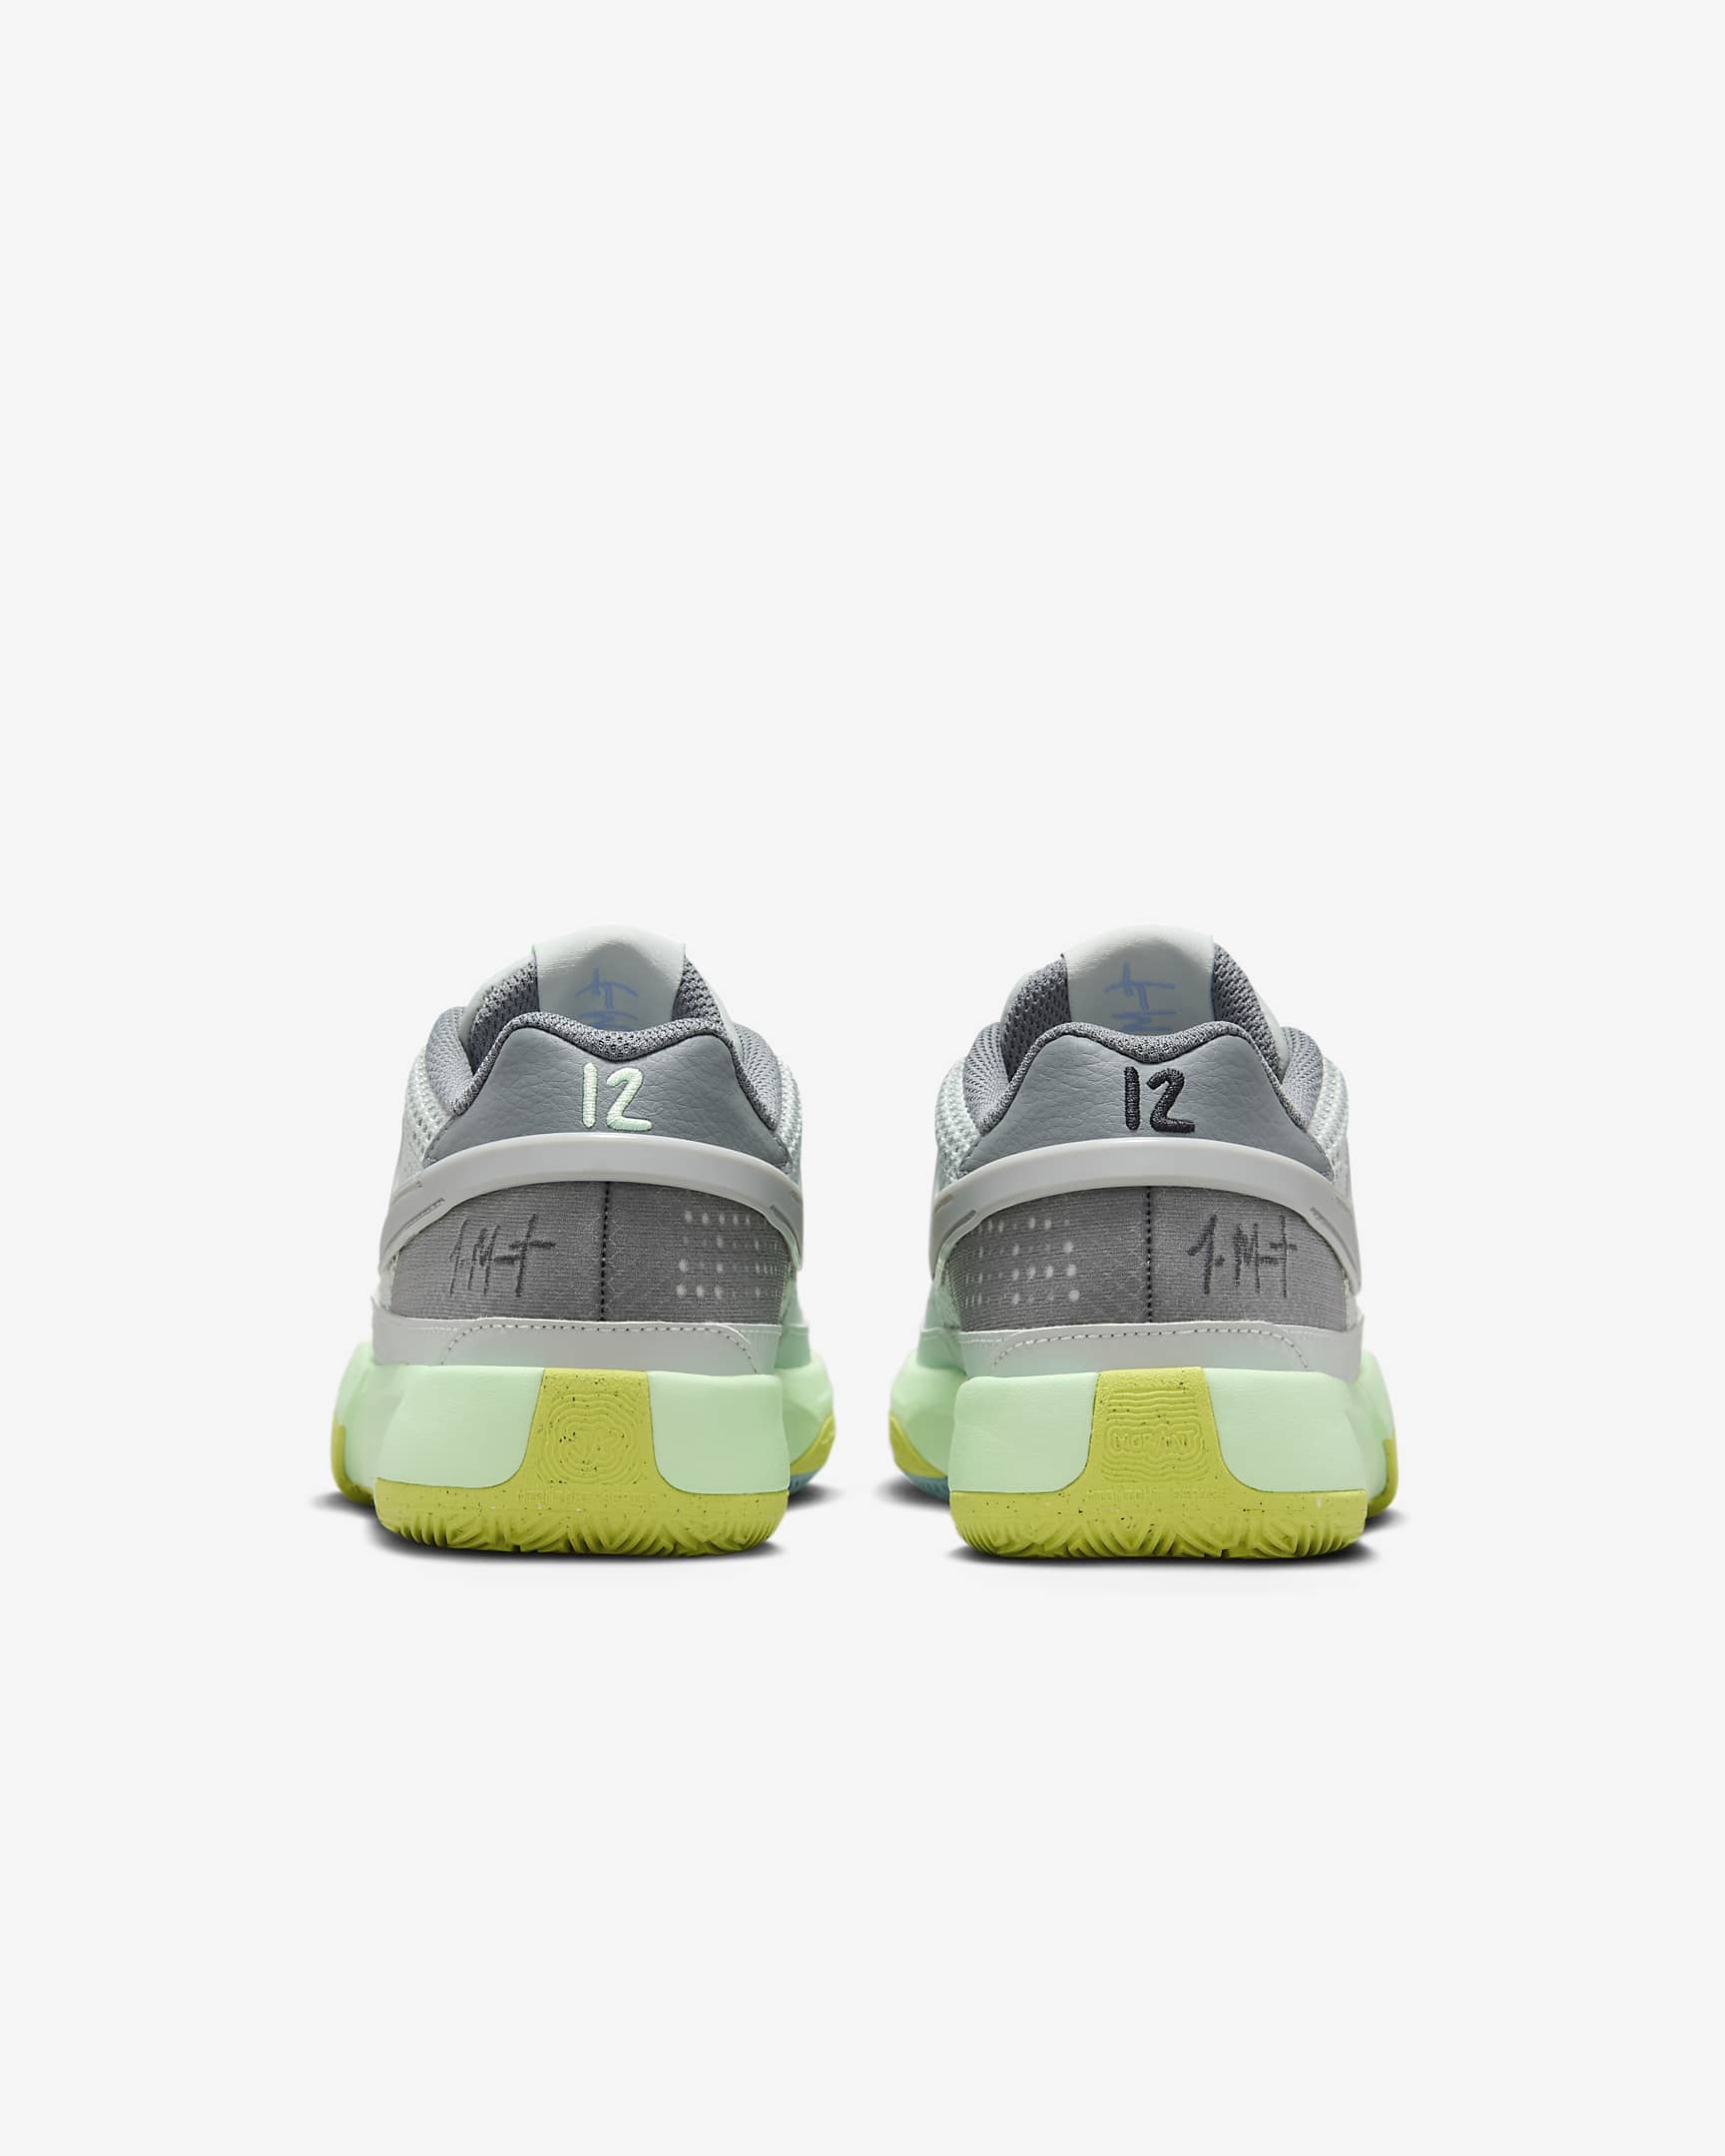 Ja 1 'Flash' Older Kids' Basketball Shoes - Light Silver/Cyber/Cool Grey/Granite